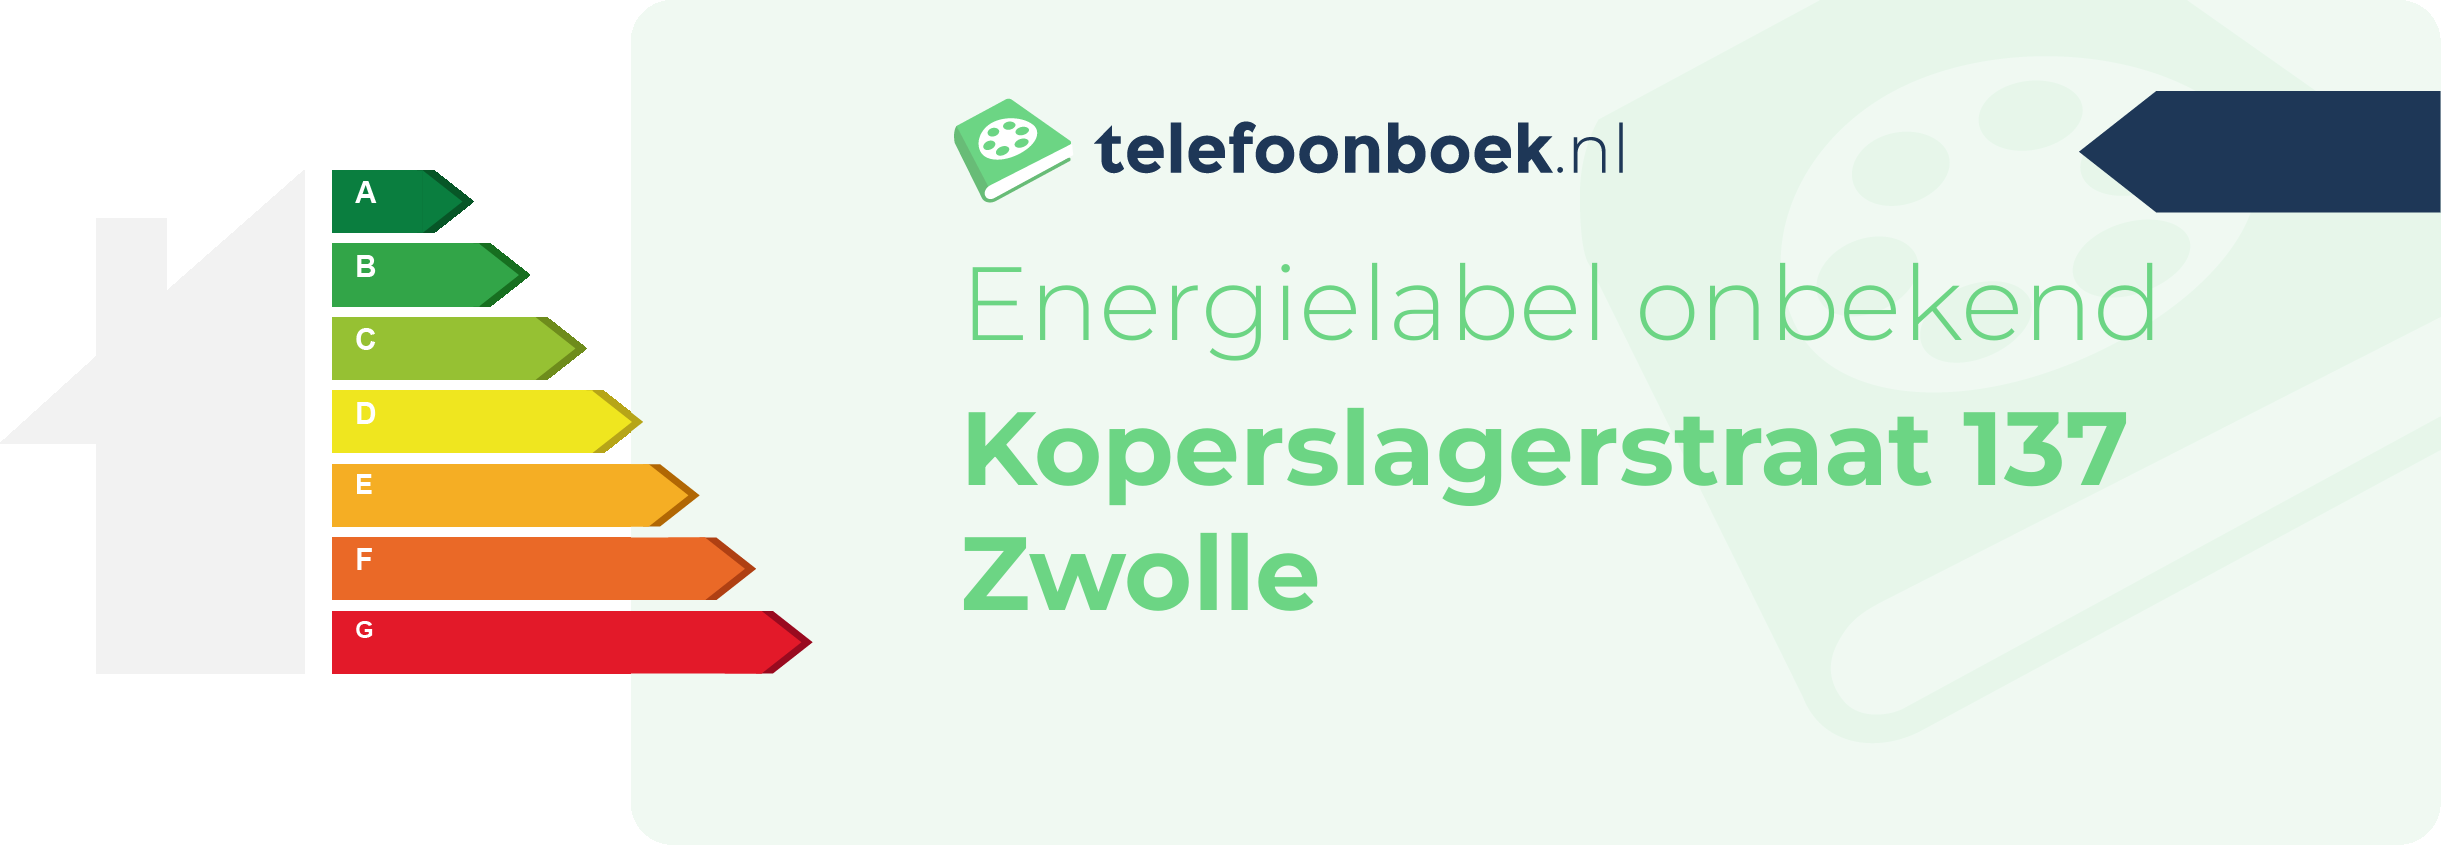 Energielabel Koperslagerstraat 137 Zwolle